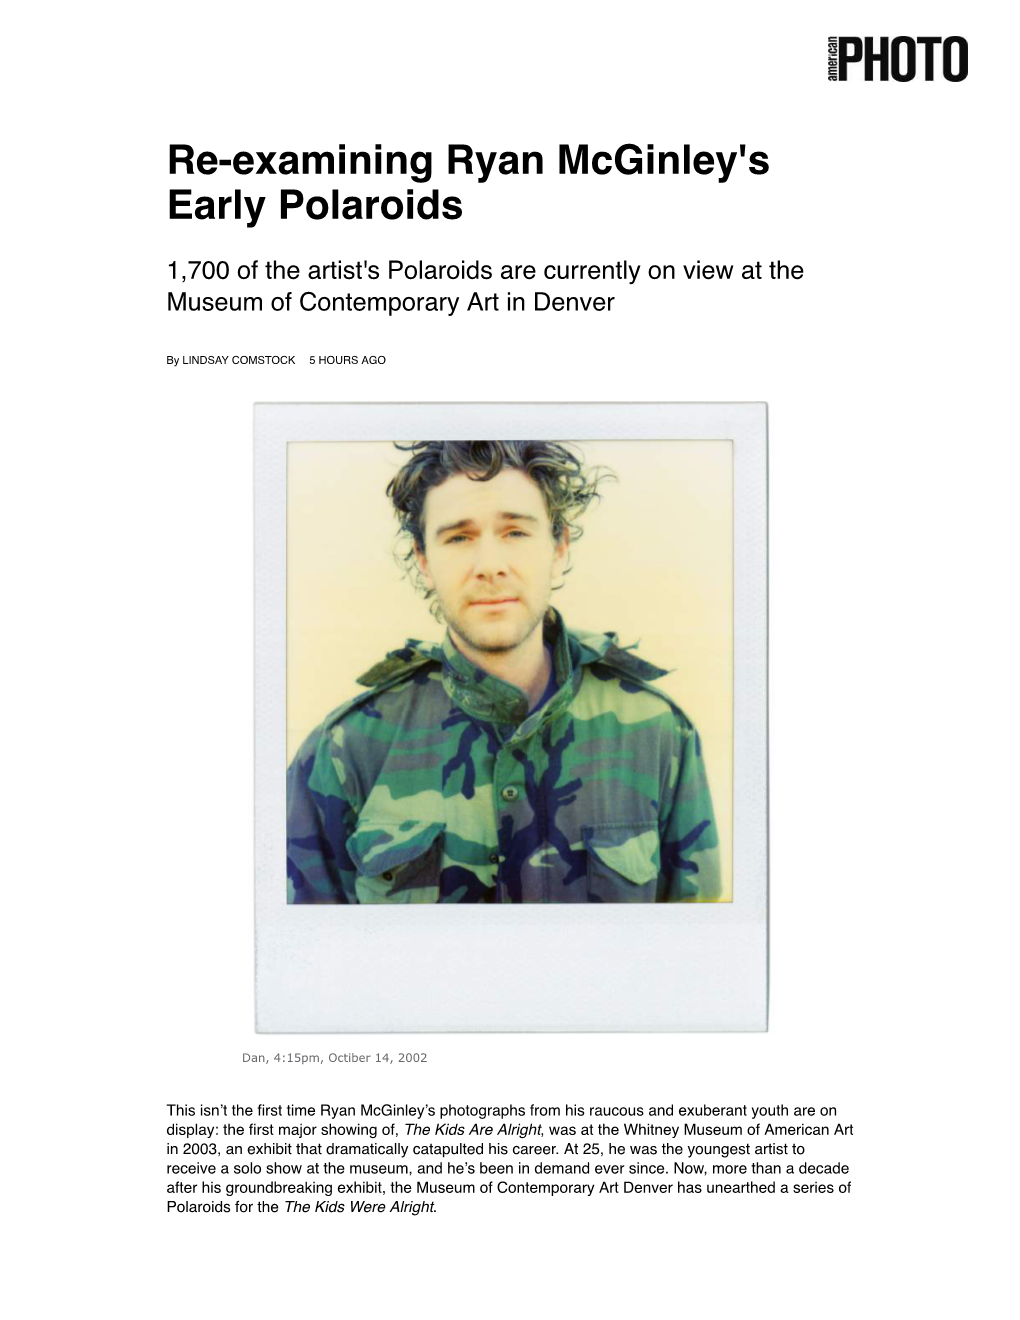 Re-Examining Ryan Mcginley's Early Polaroids | American Photo